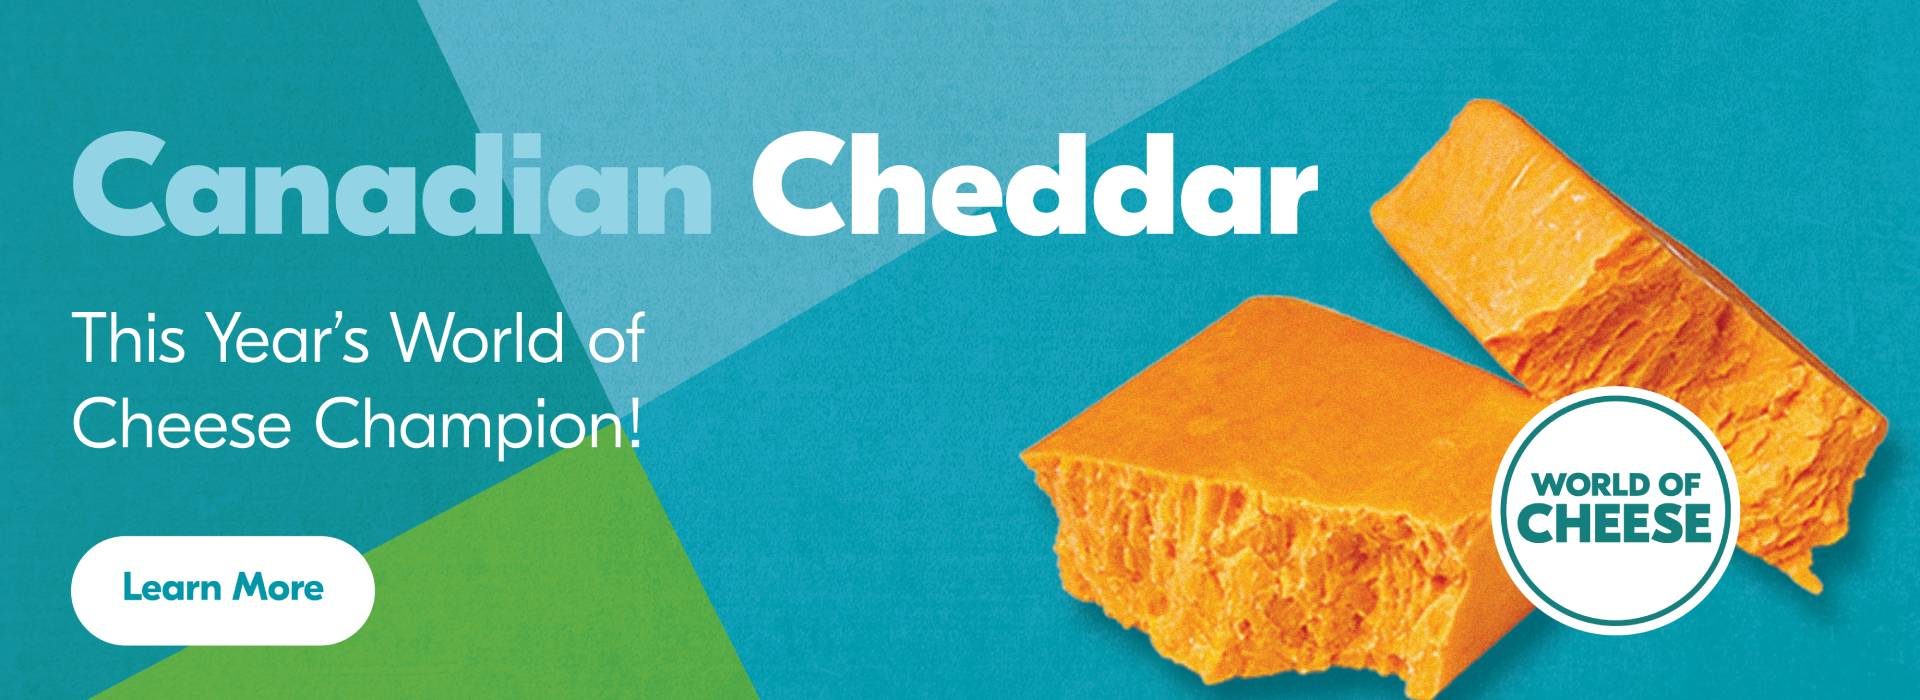 Canadian Cheddar Cheese